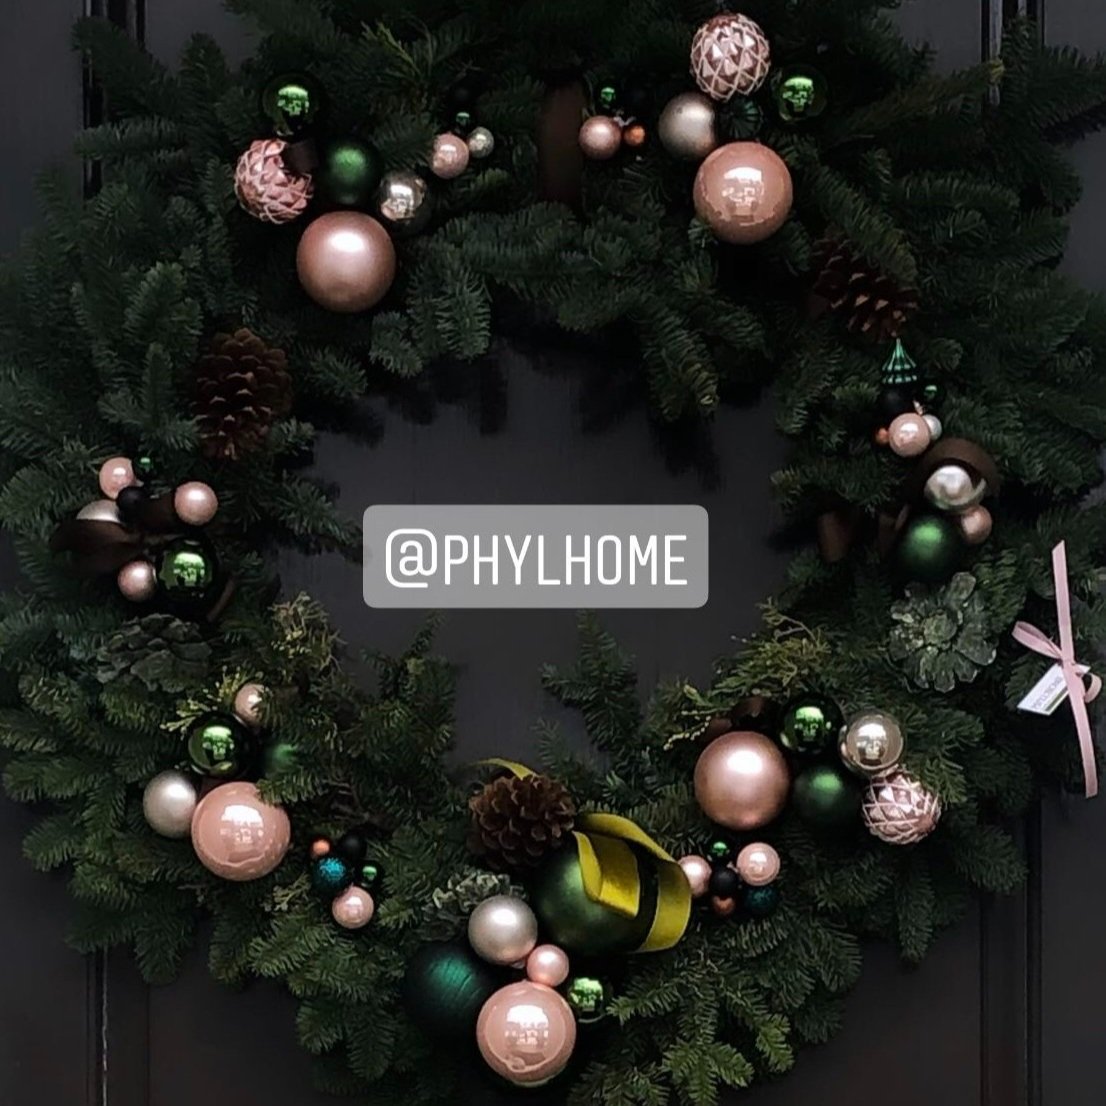 Phyl’home Flowers etcaetera